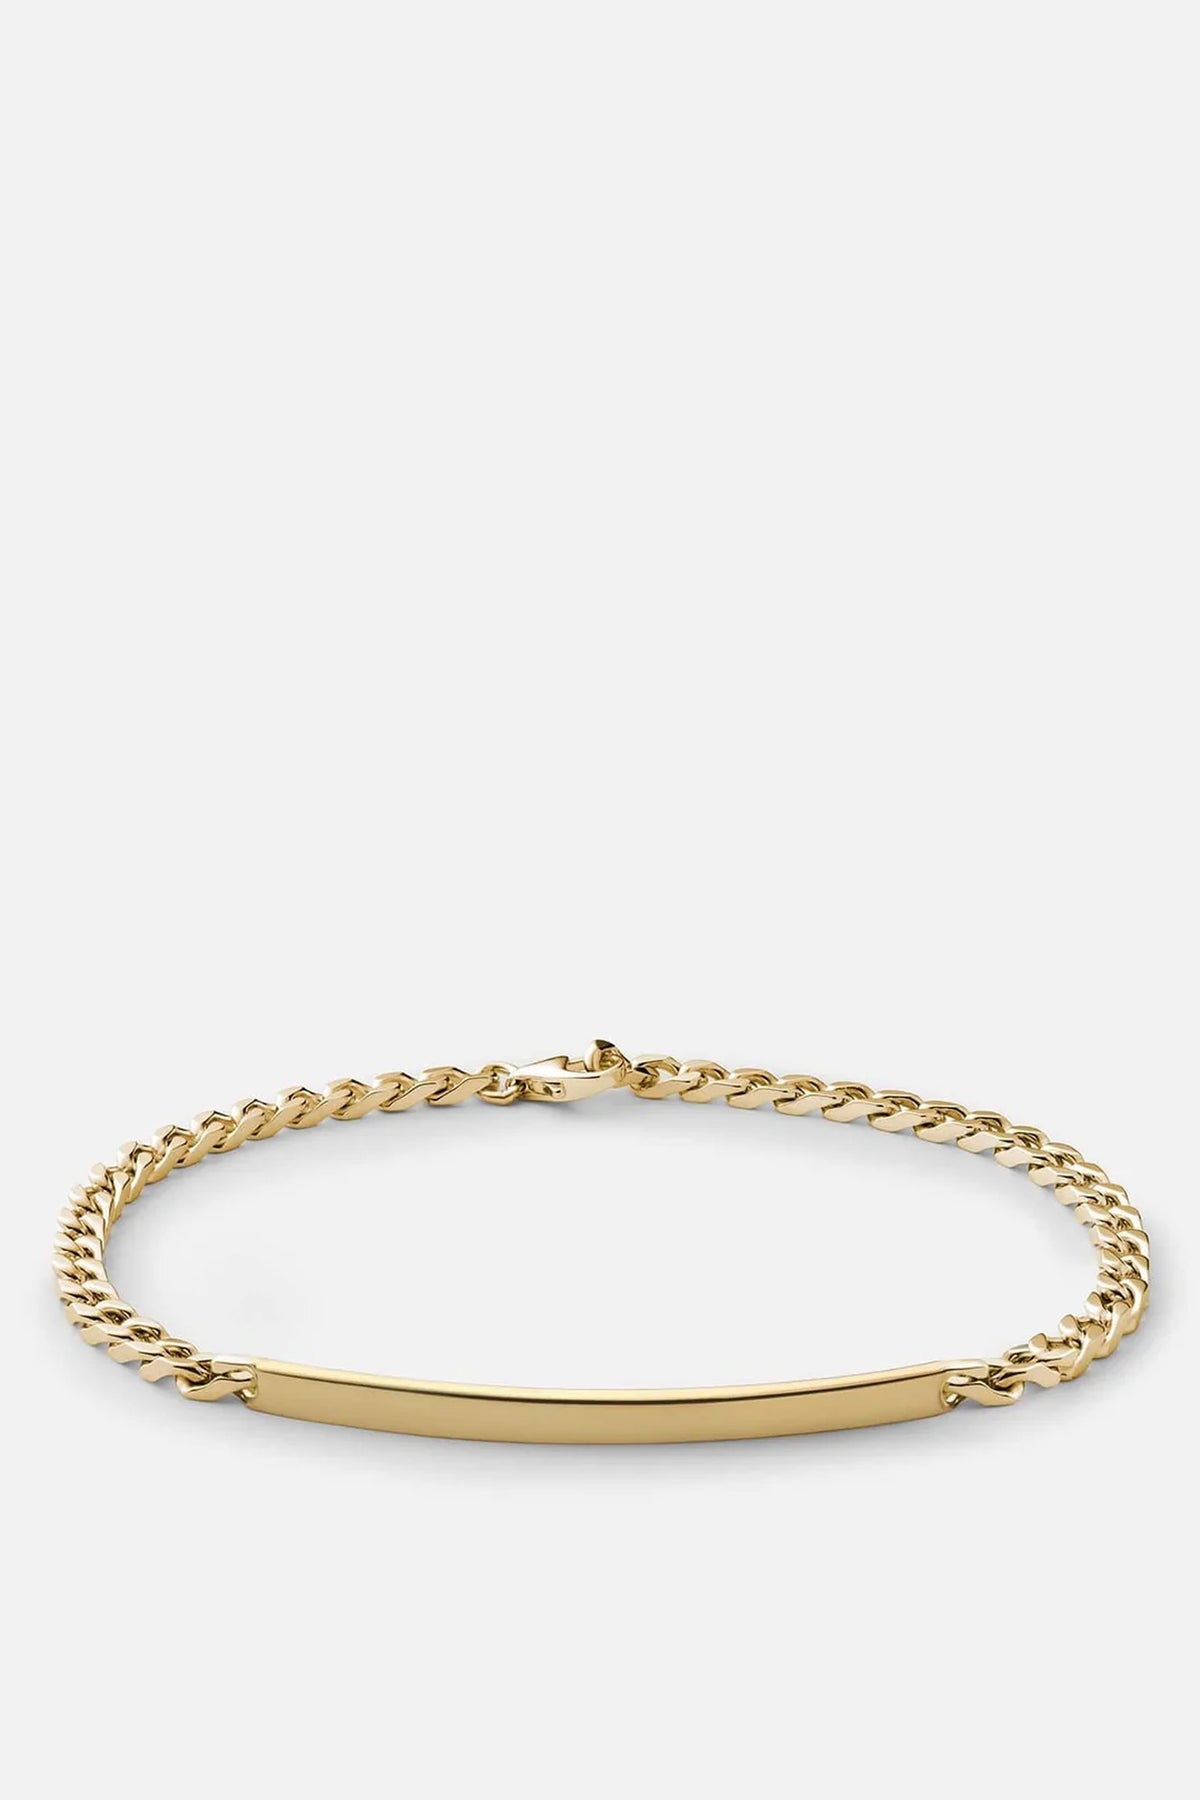 Miansai 3mm ID Chain Bracelet Gold Vermeil